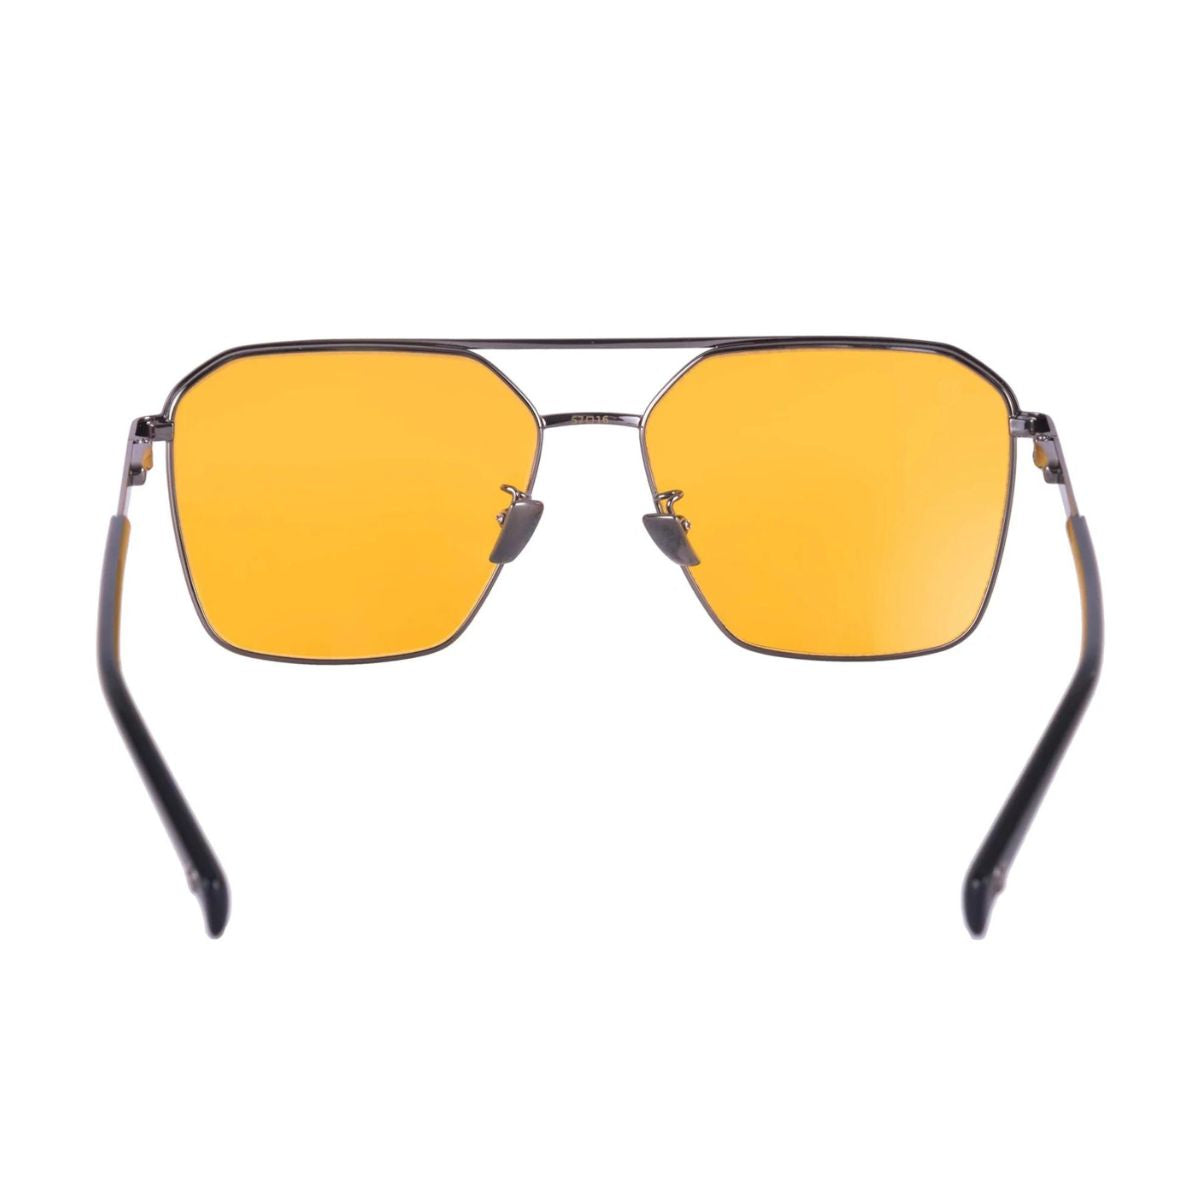 "The Monk Revolution C2 UV Protection Modern Sunglasses For Men And Women At Optorium"